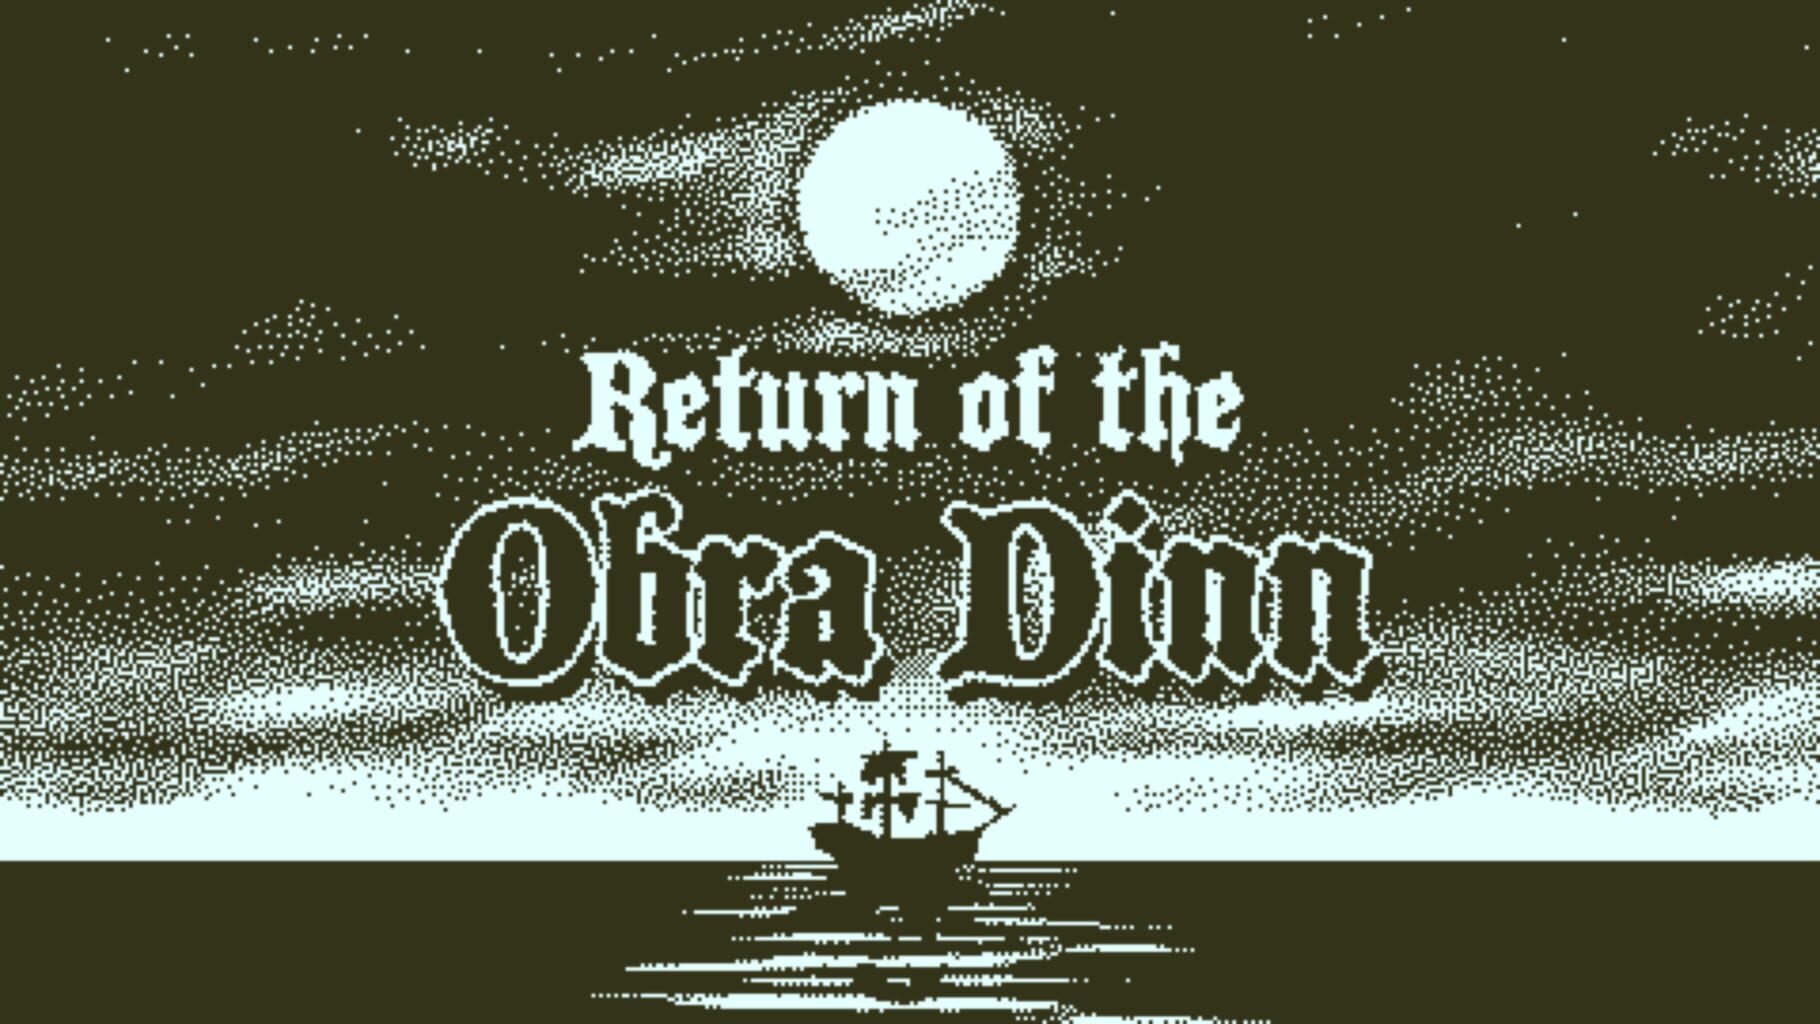 Return of the Obra Dinn artwork